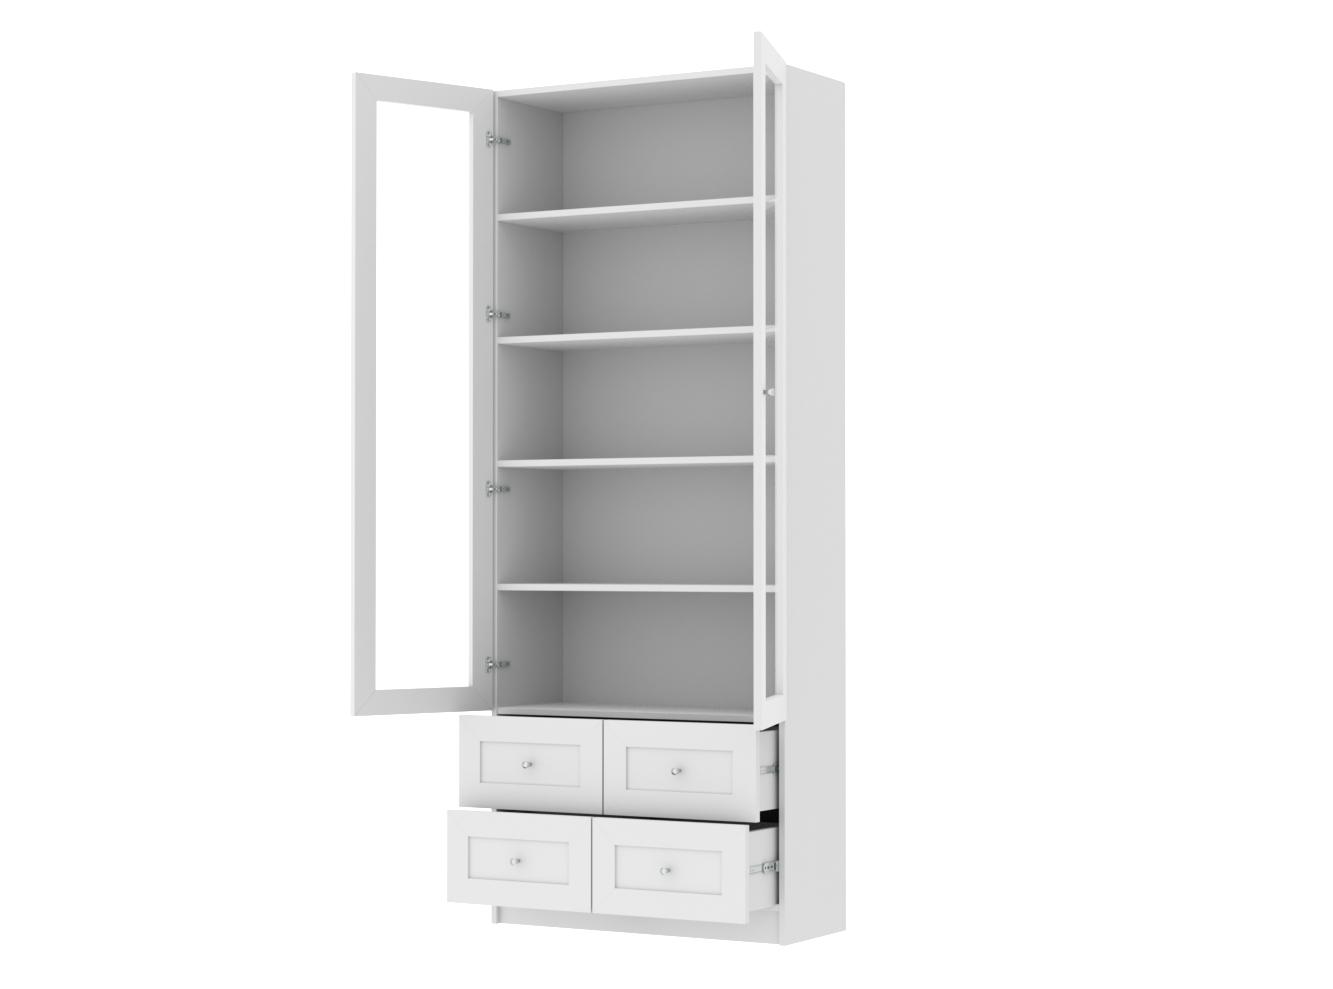  Книжный шкаф Билли 316 white ИКЕА (IKEA) изображение товара